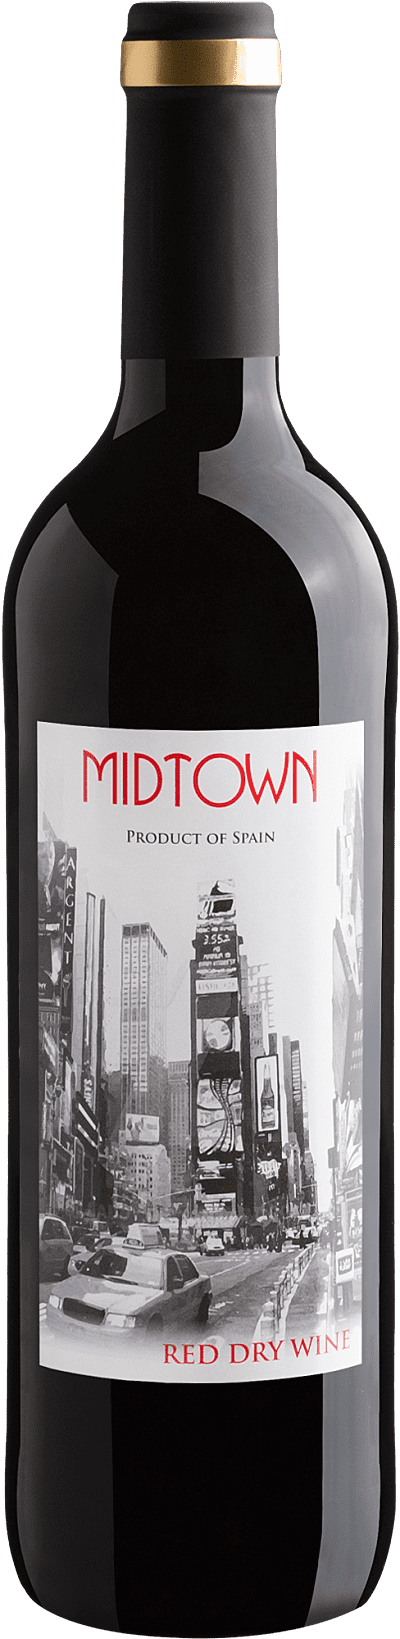 Midtown Red Dry Wine